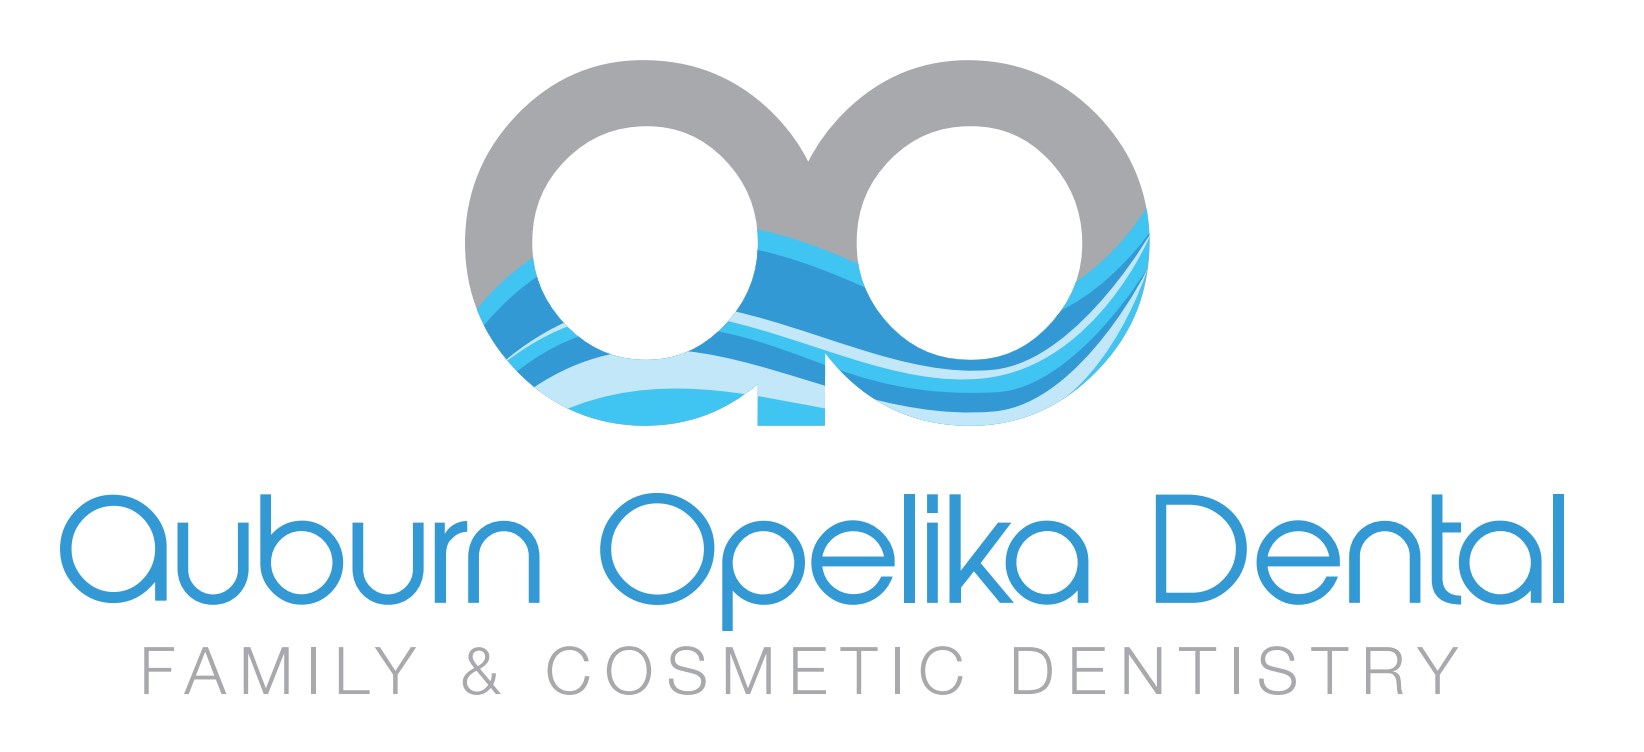 Auburn Opelika Dental logo